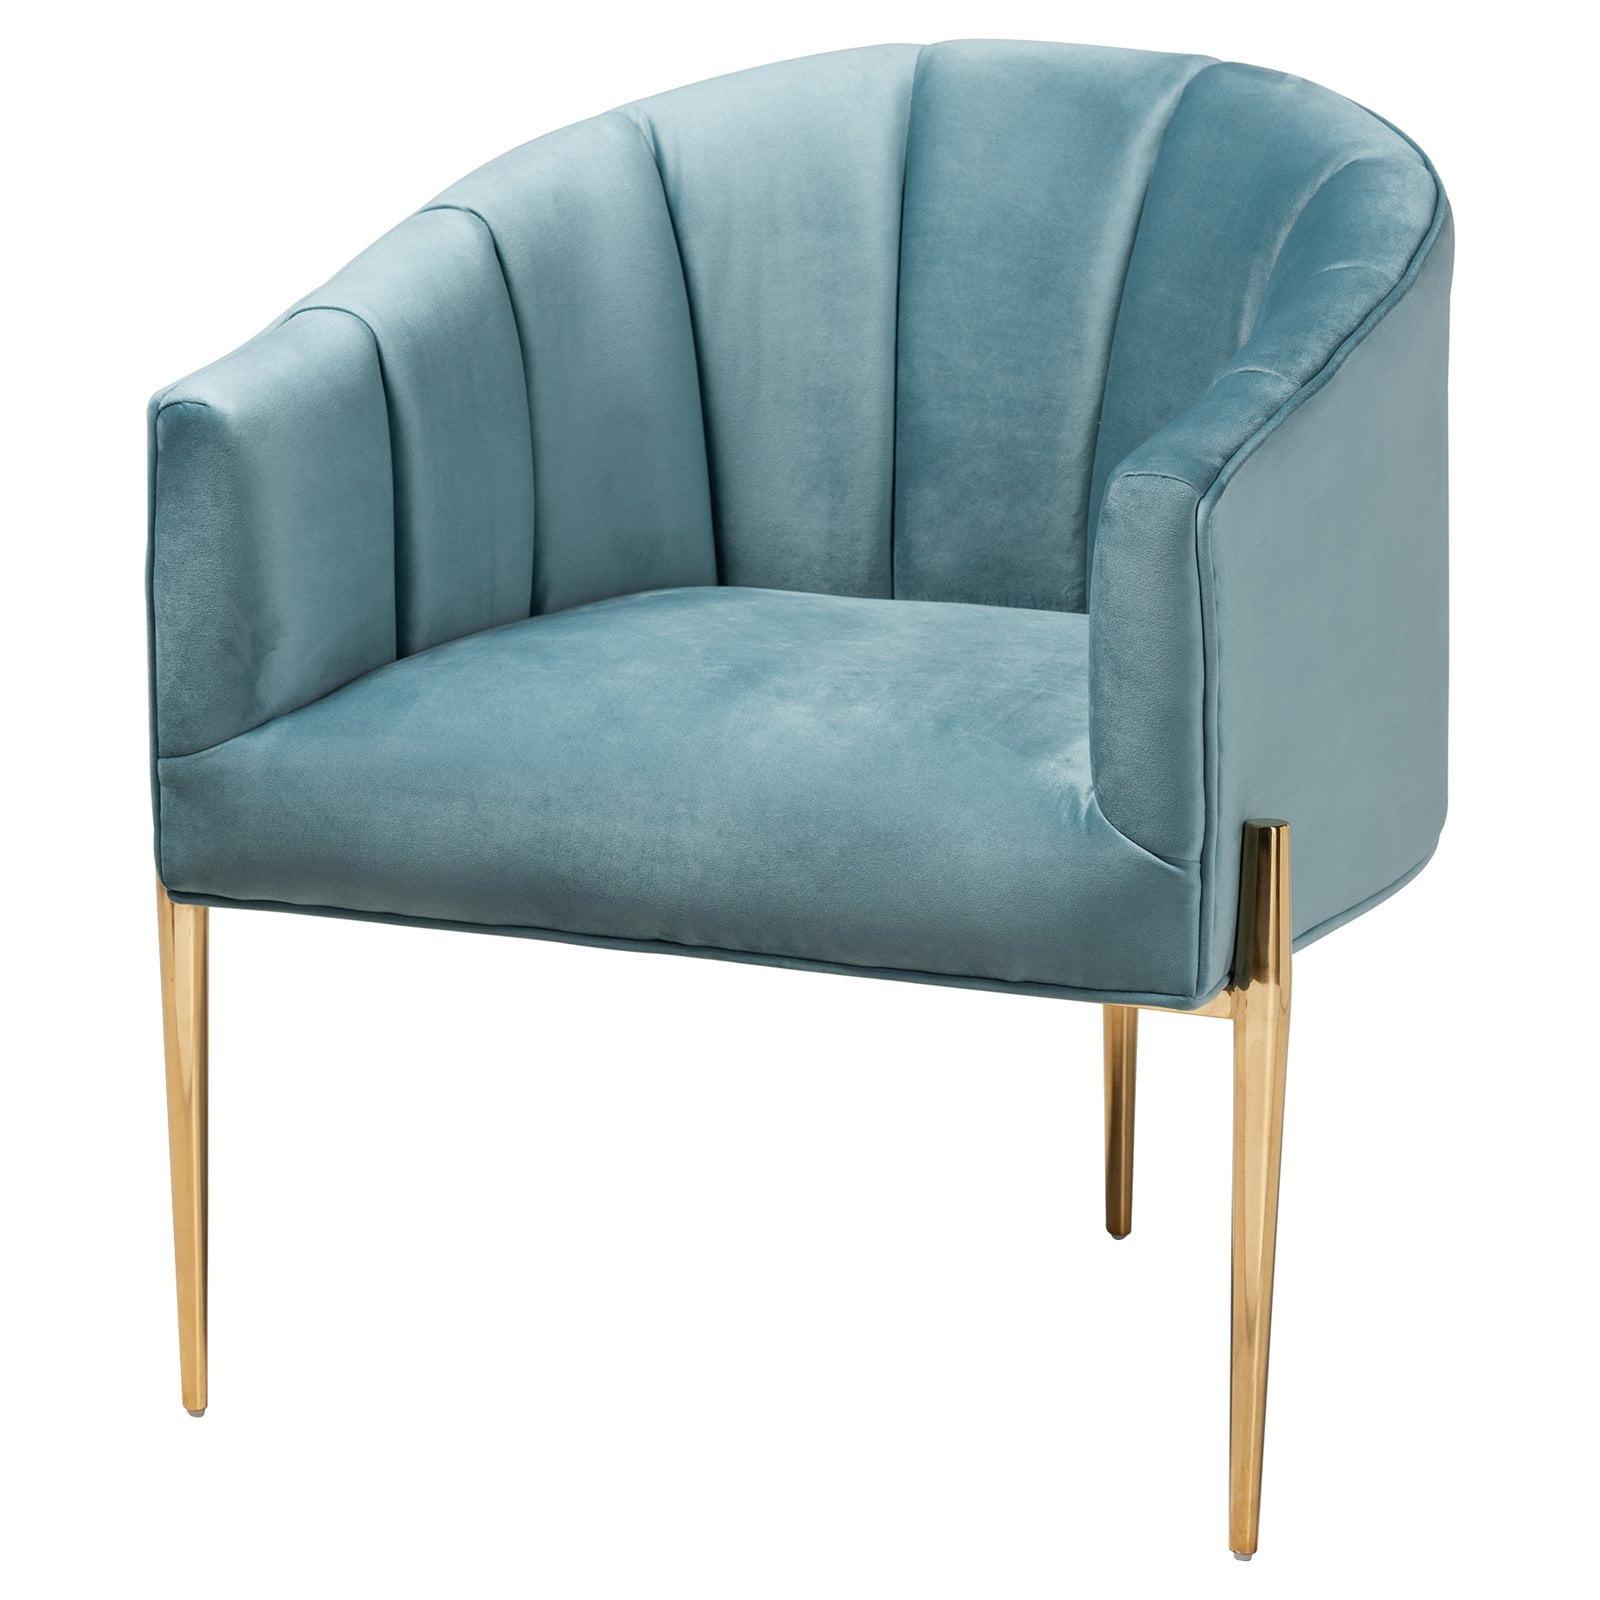 Clarisse Glam Light Blue Velvet Barrel Accent Chair with Gold Legs